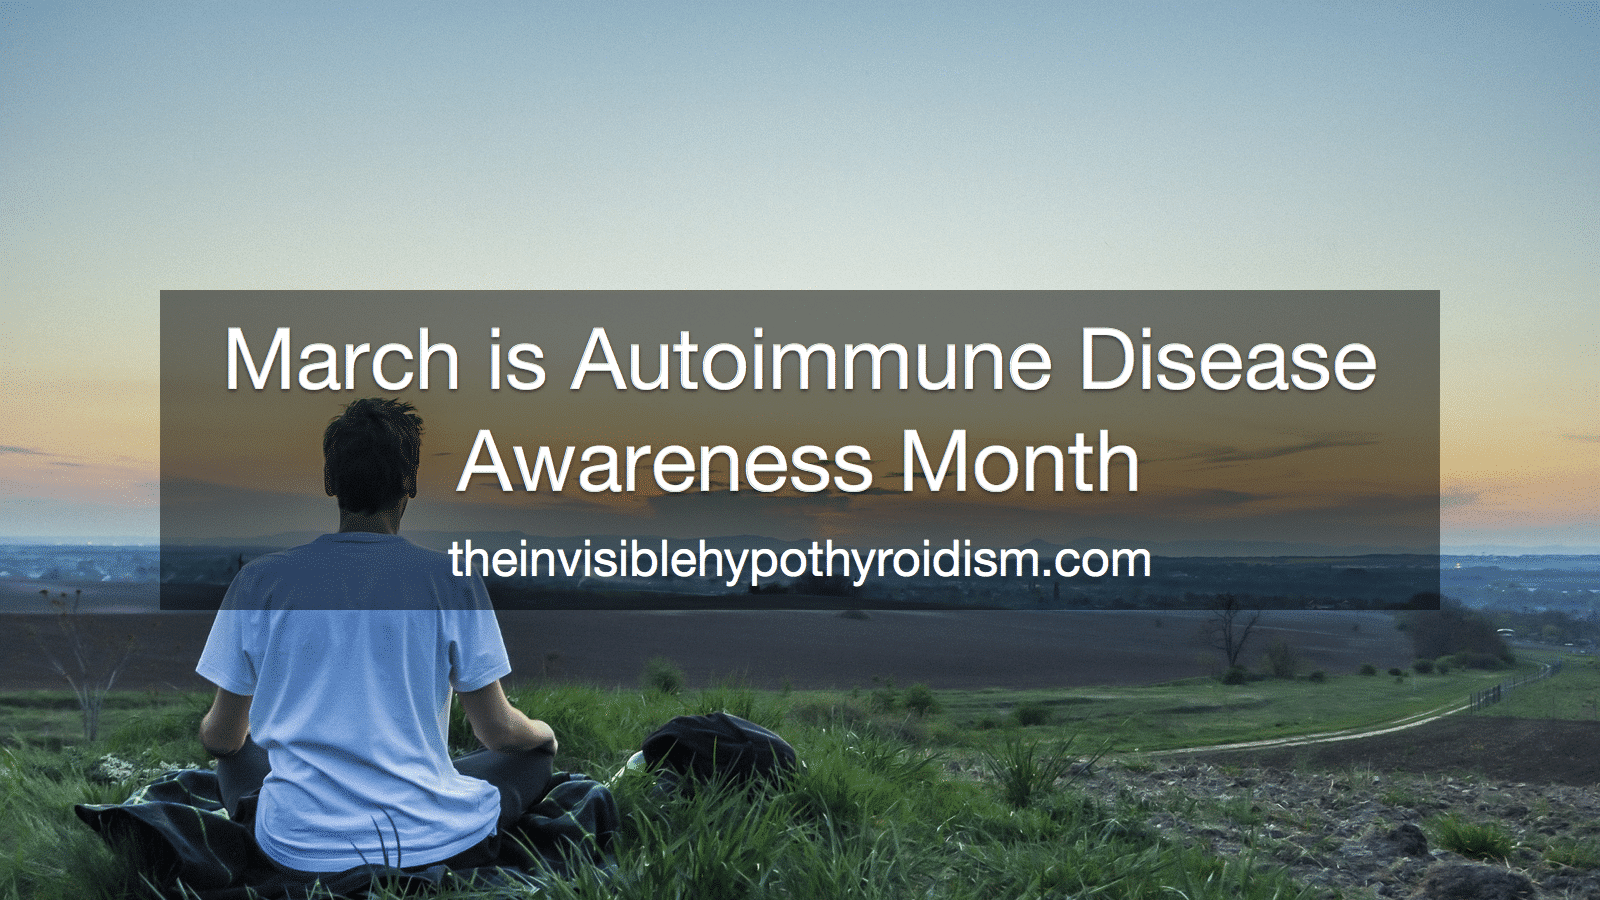 March is Autoimmune Disease Awareness Month